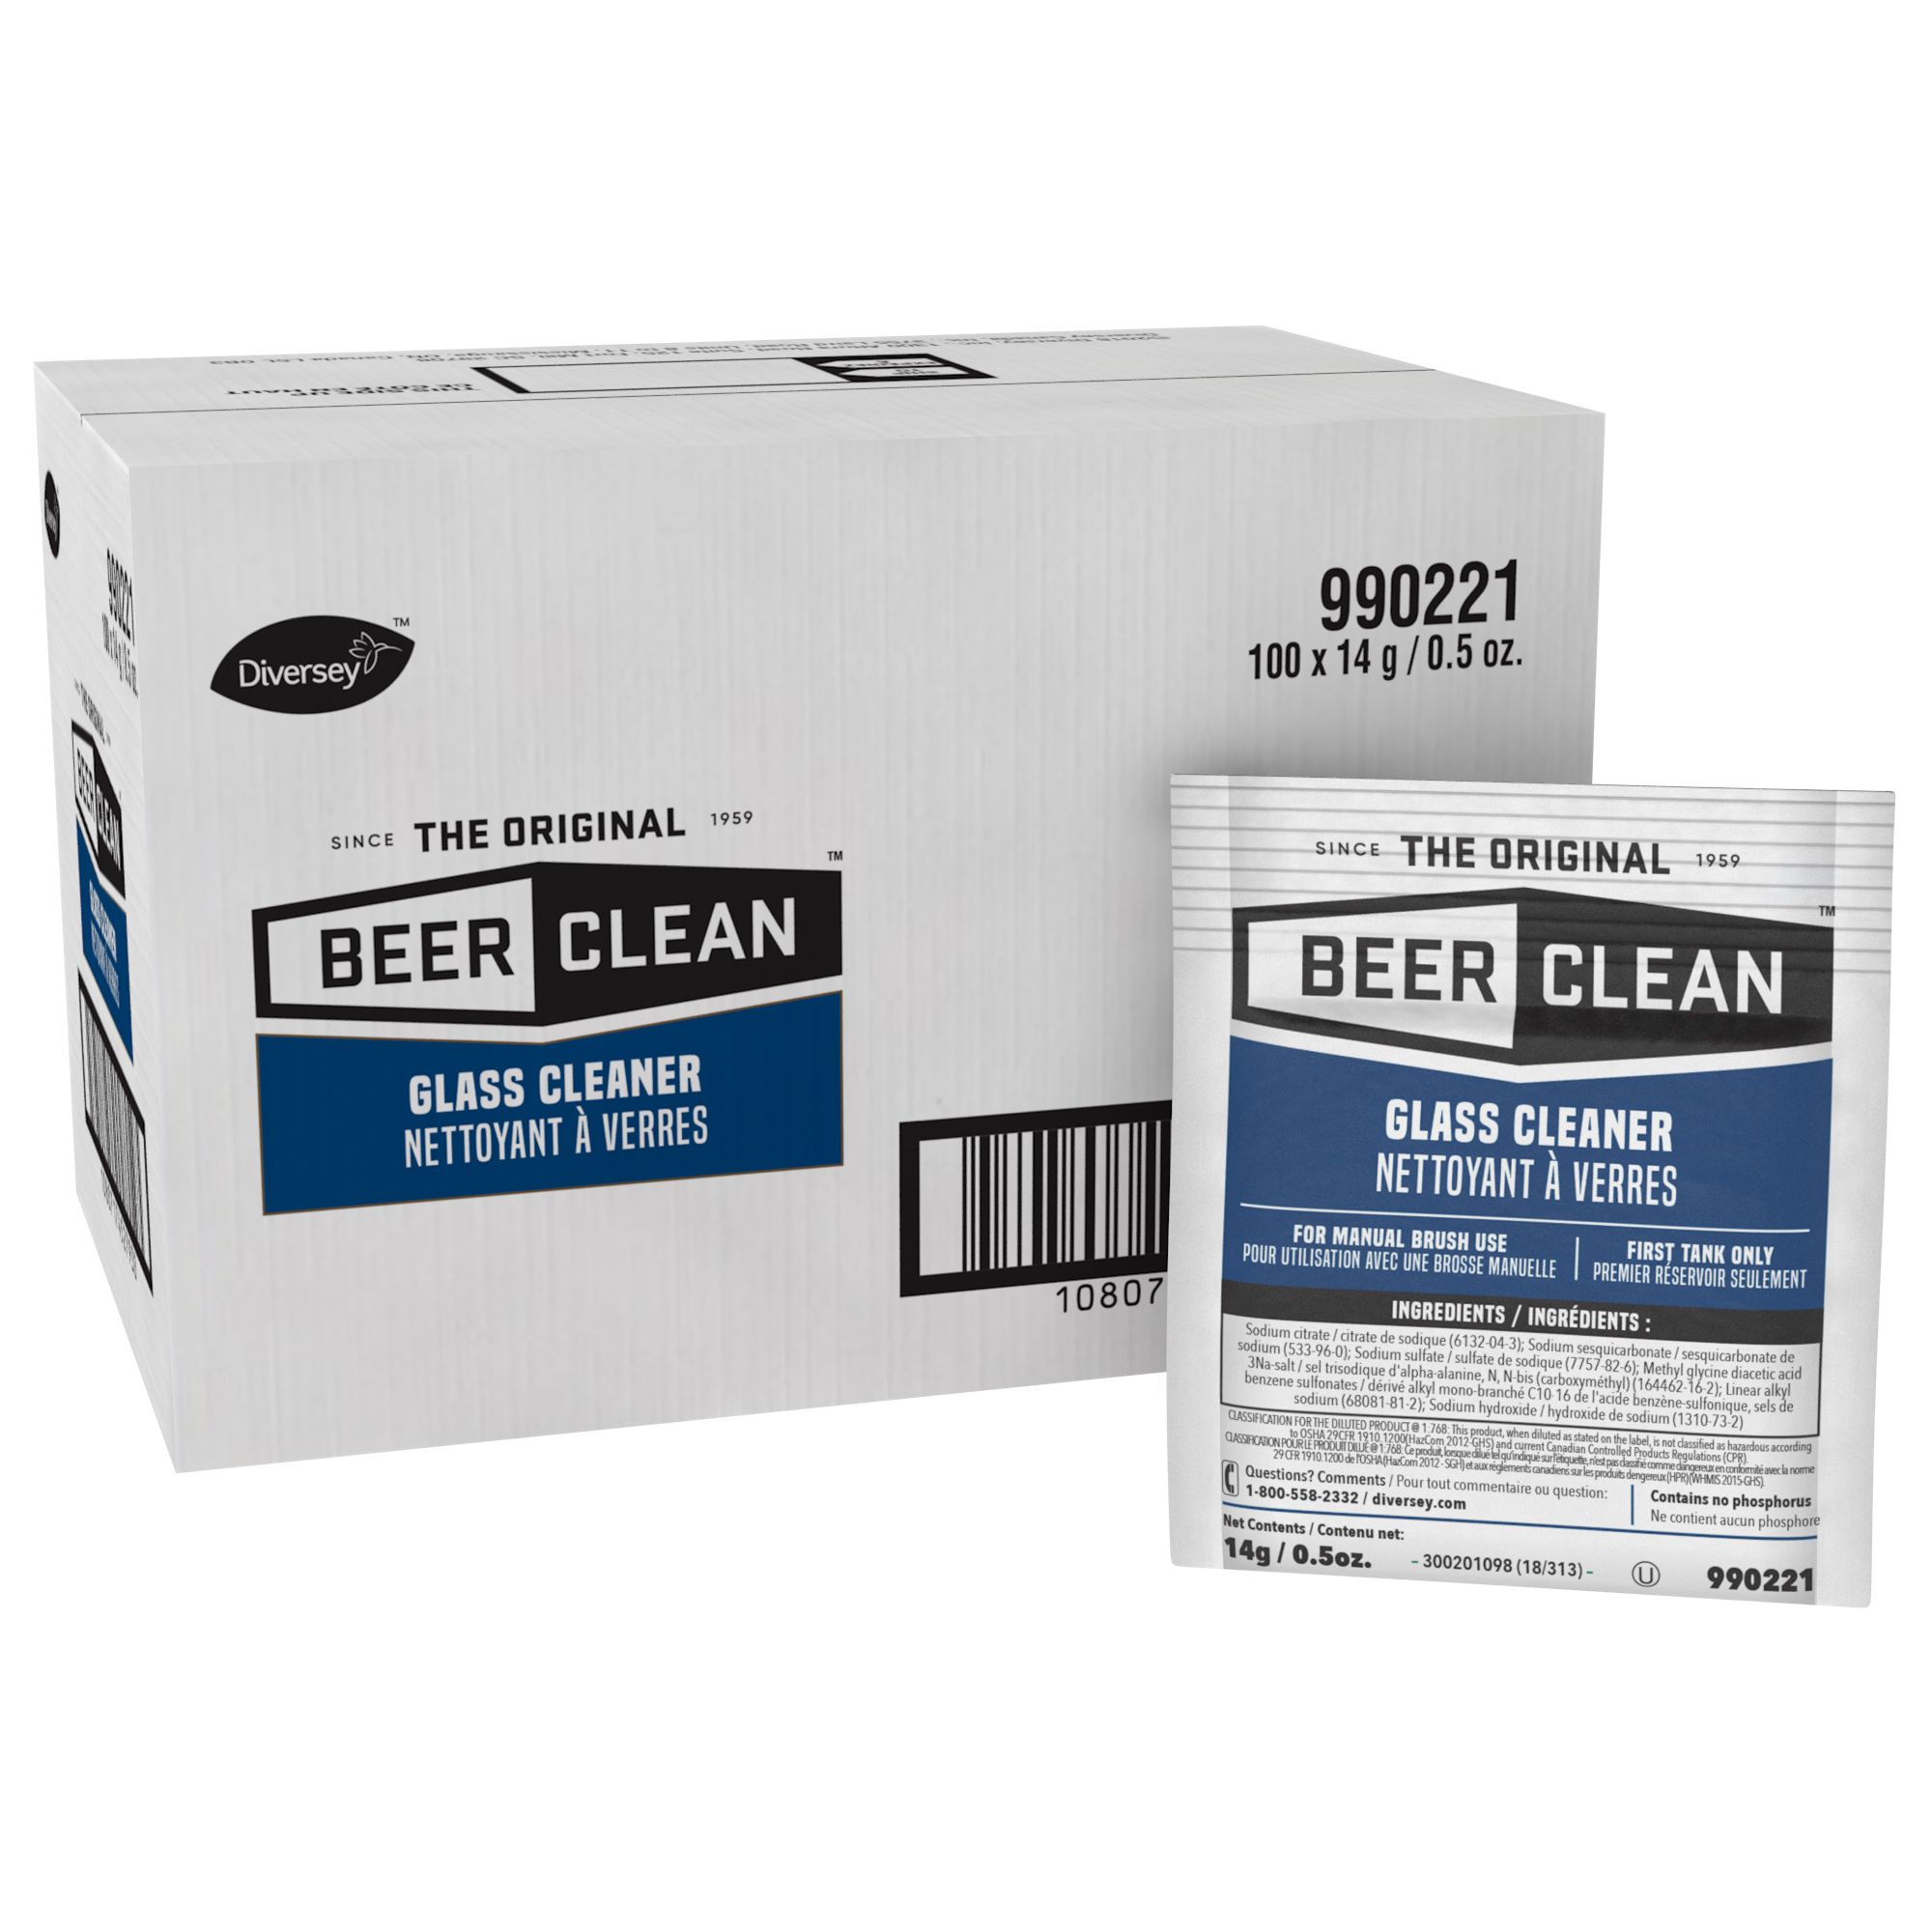 990221_Diversey_Beer_Clean_Glass_Cleaner_Carton